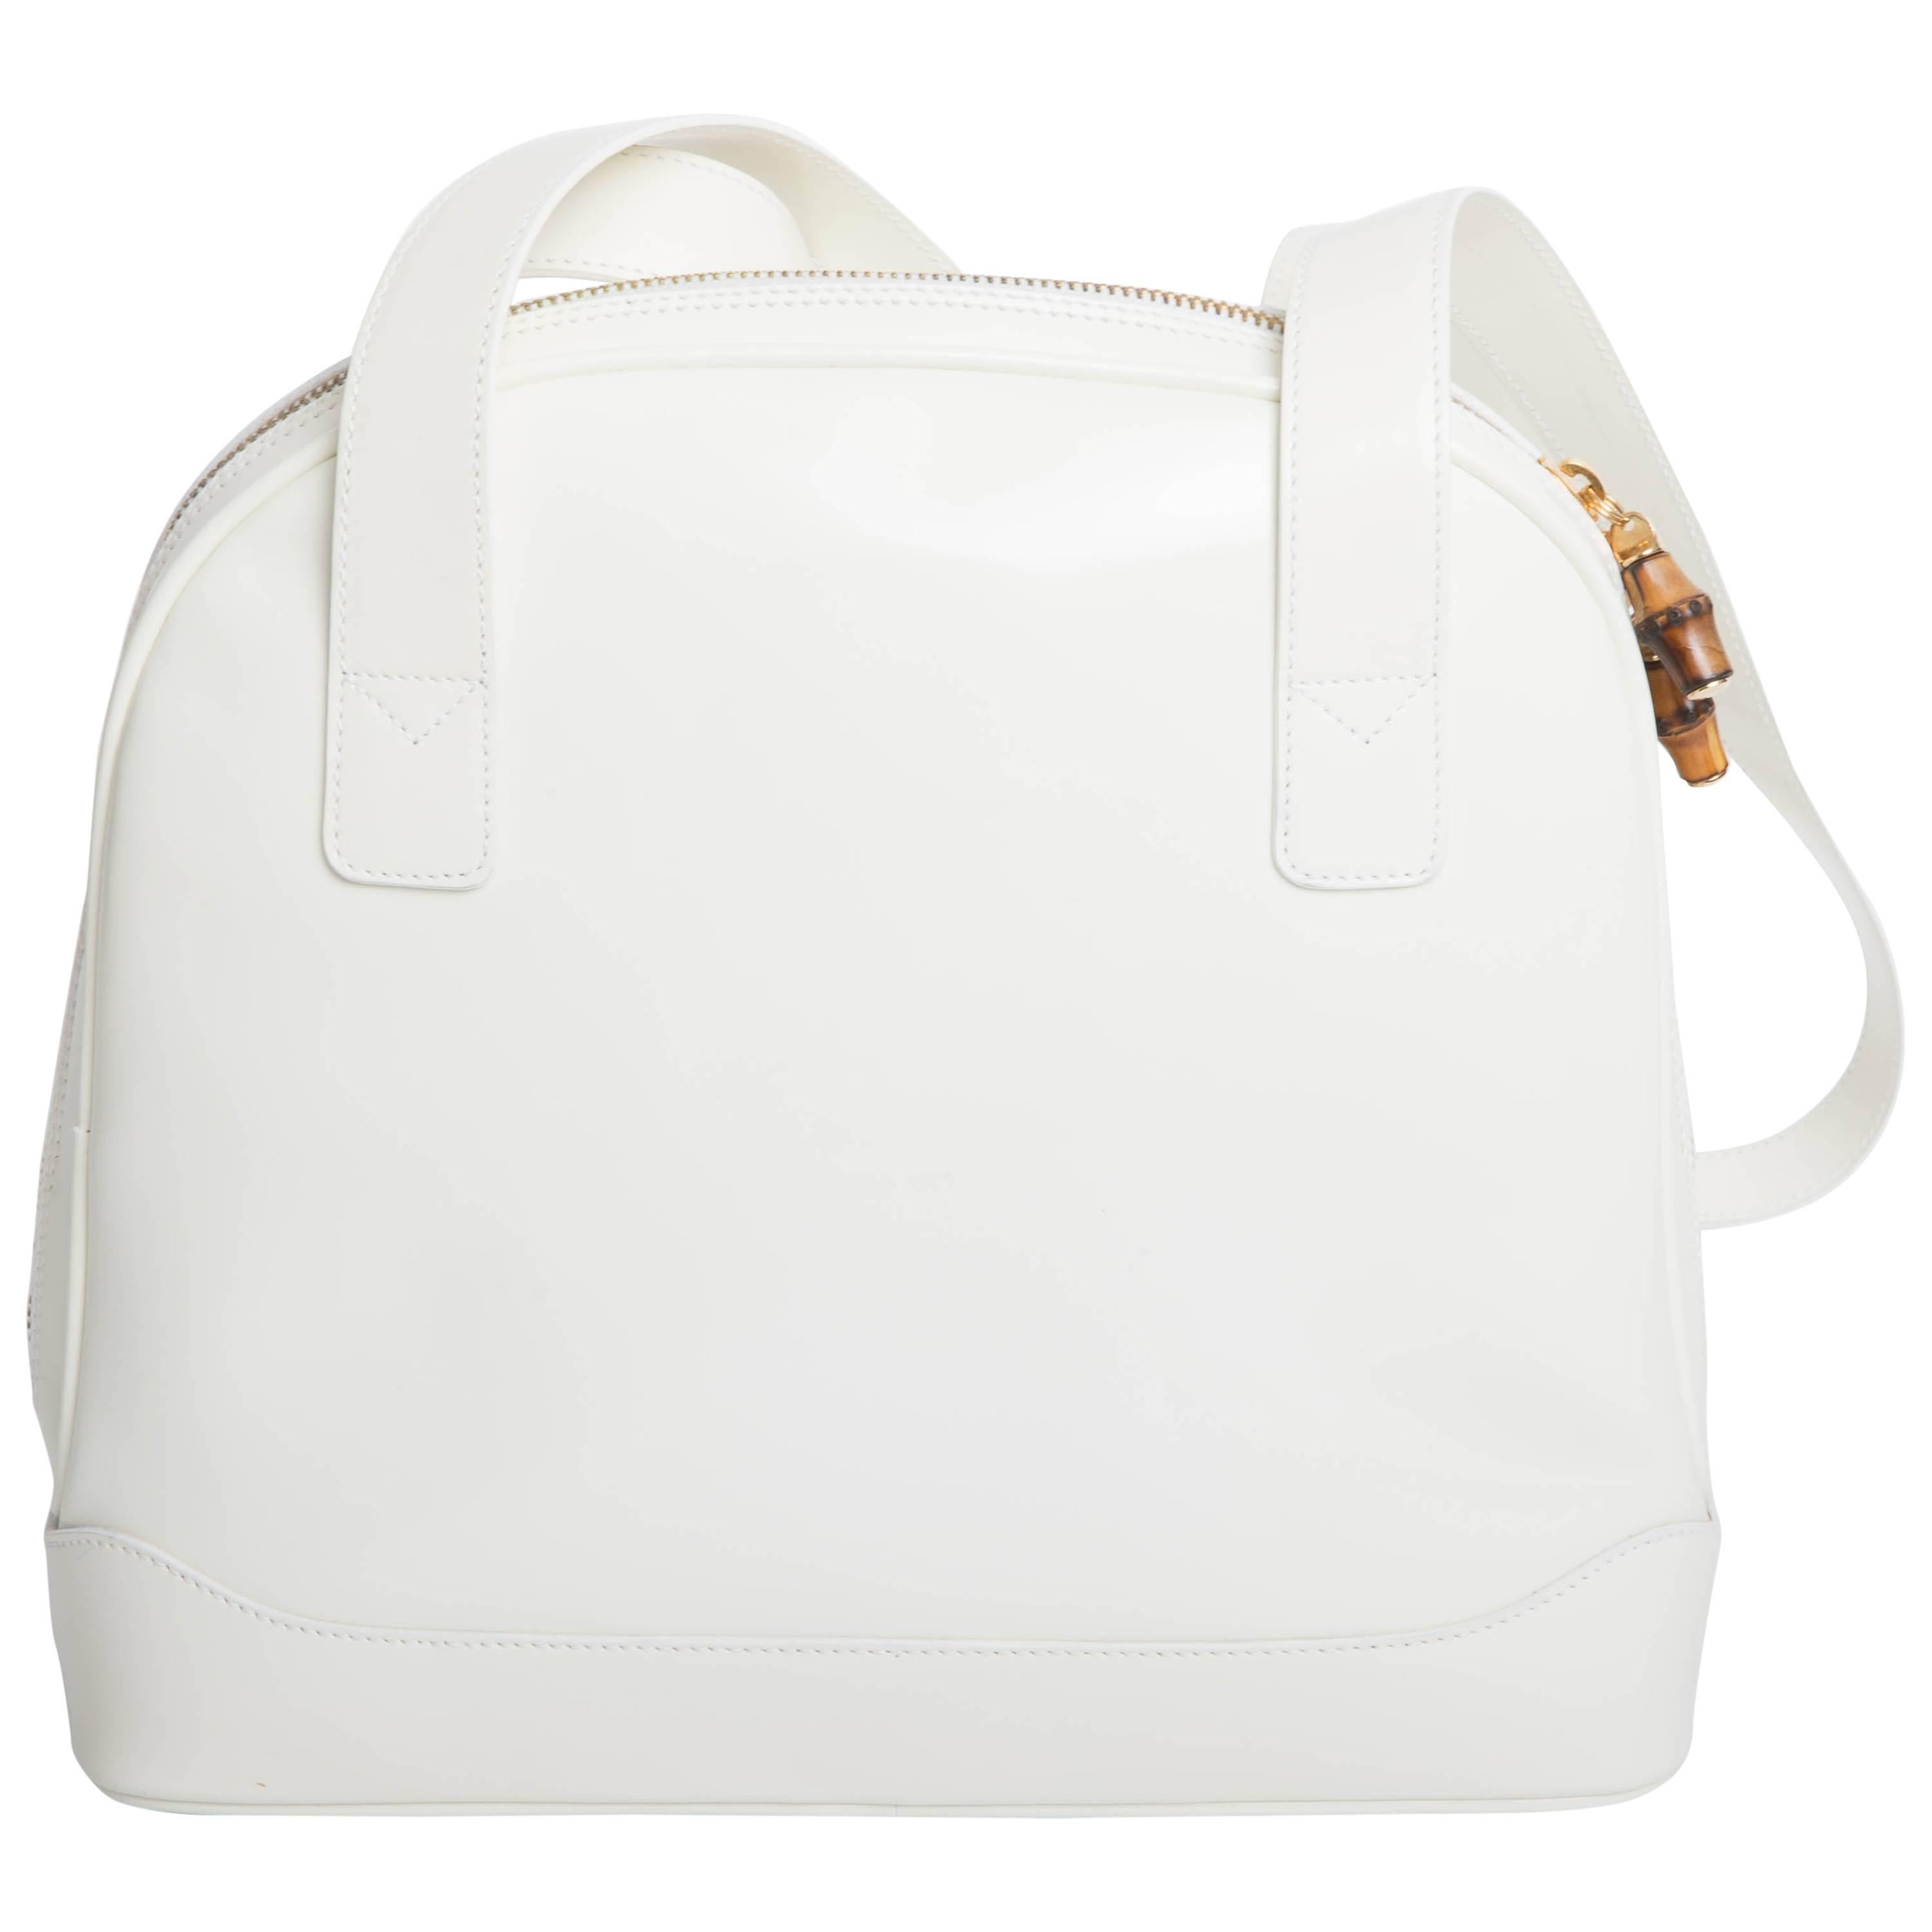 Gucci Vintage White Patent Leather Shoulder Bag